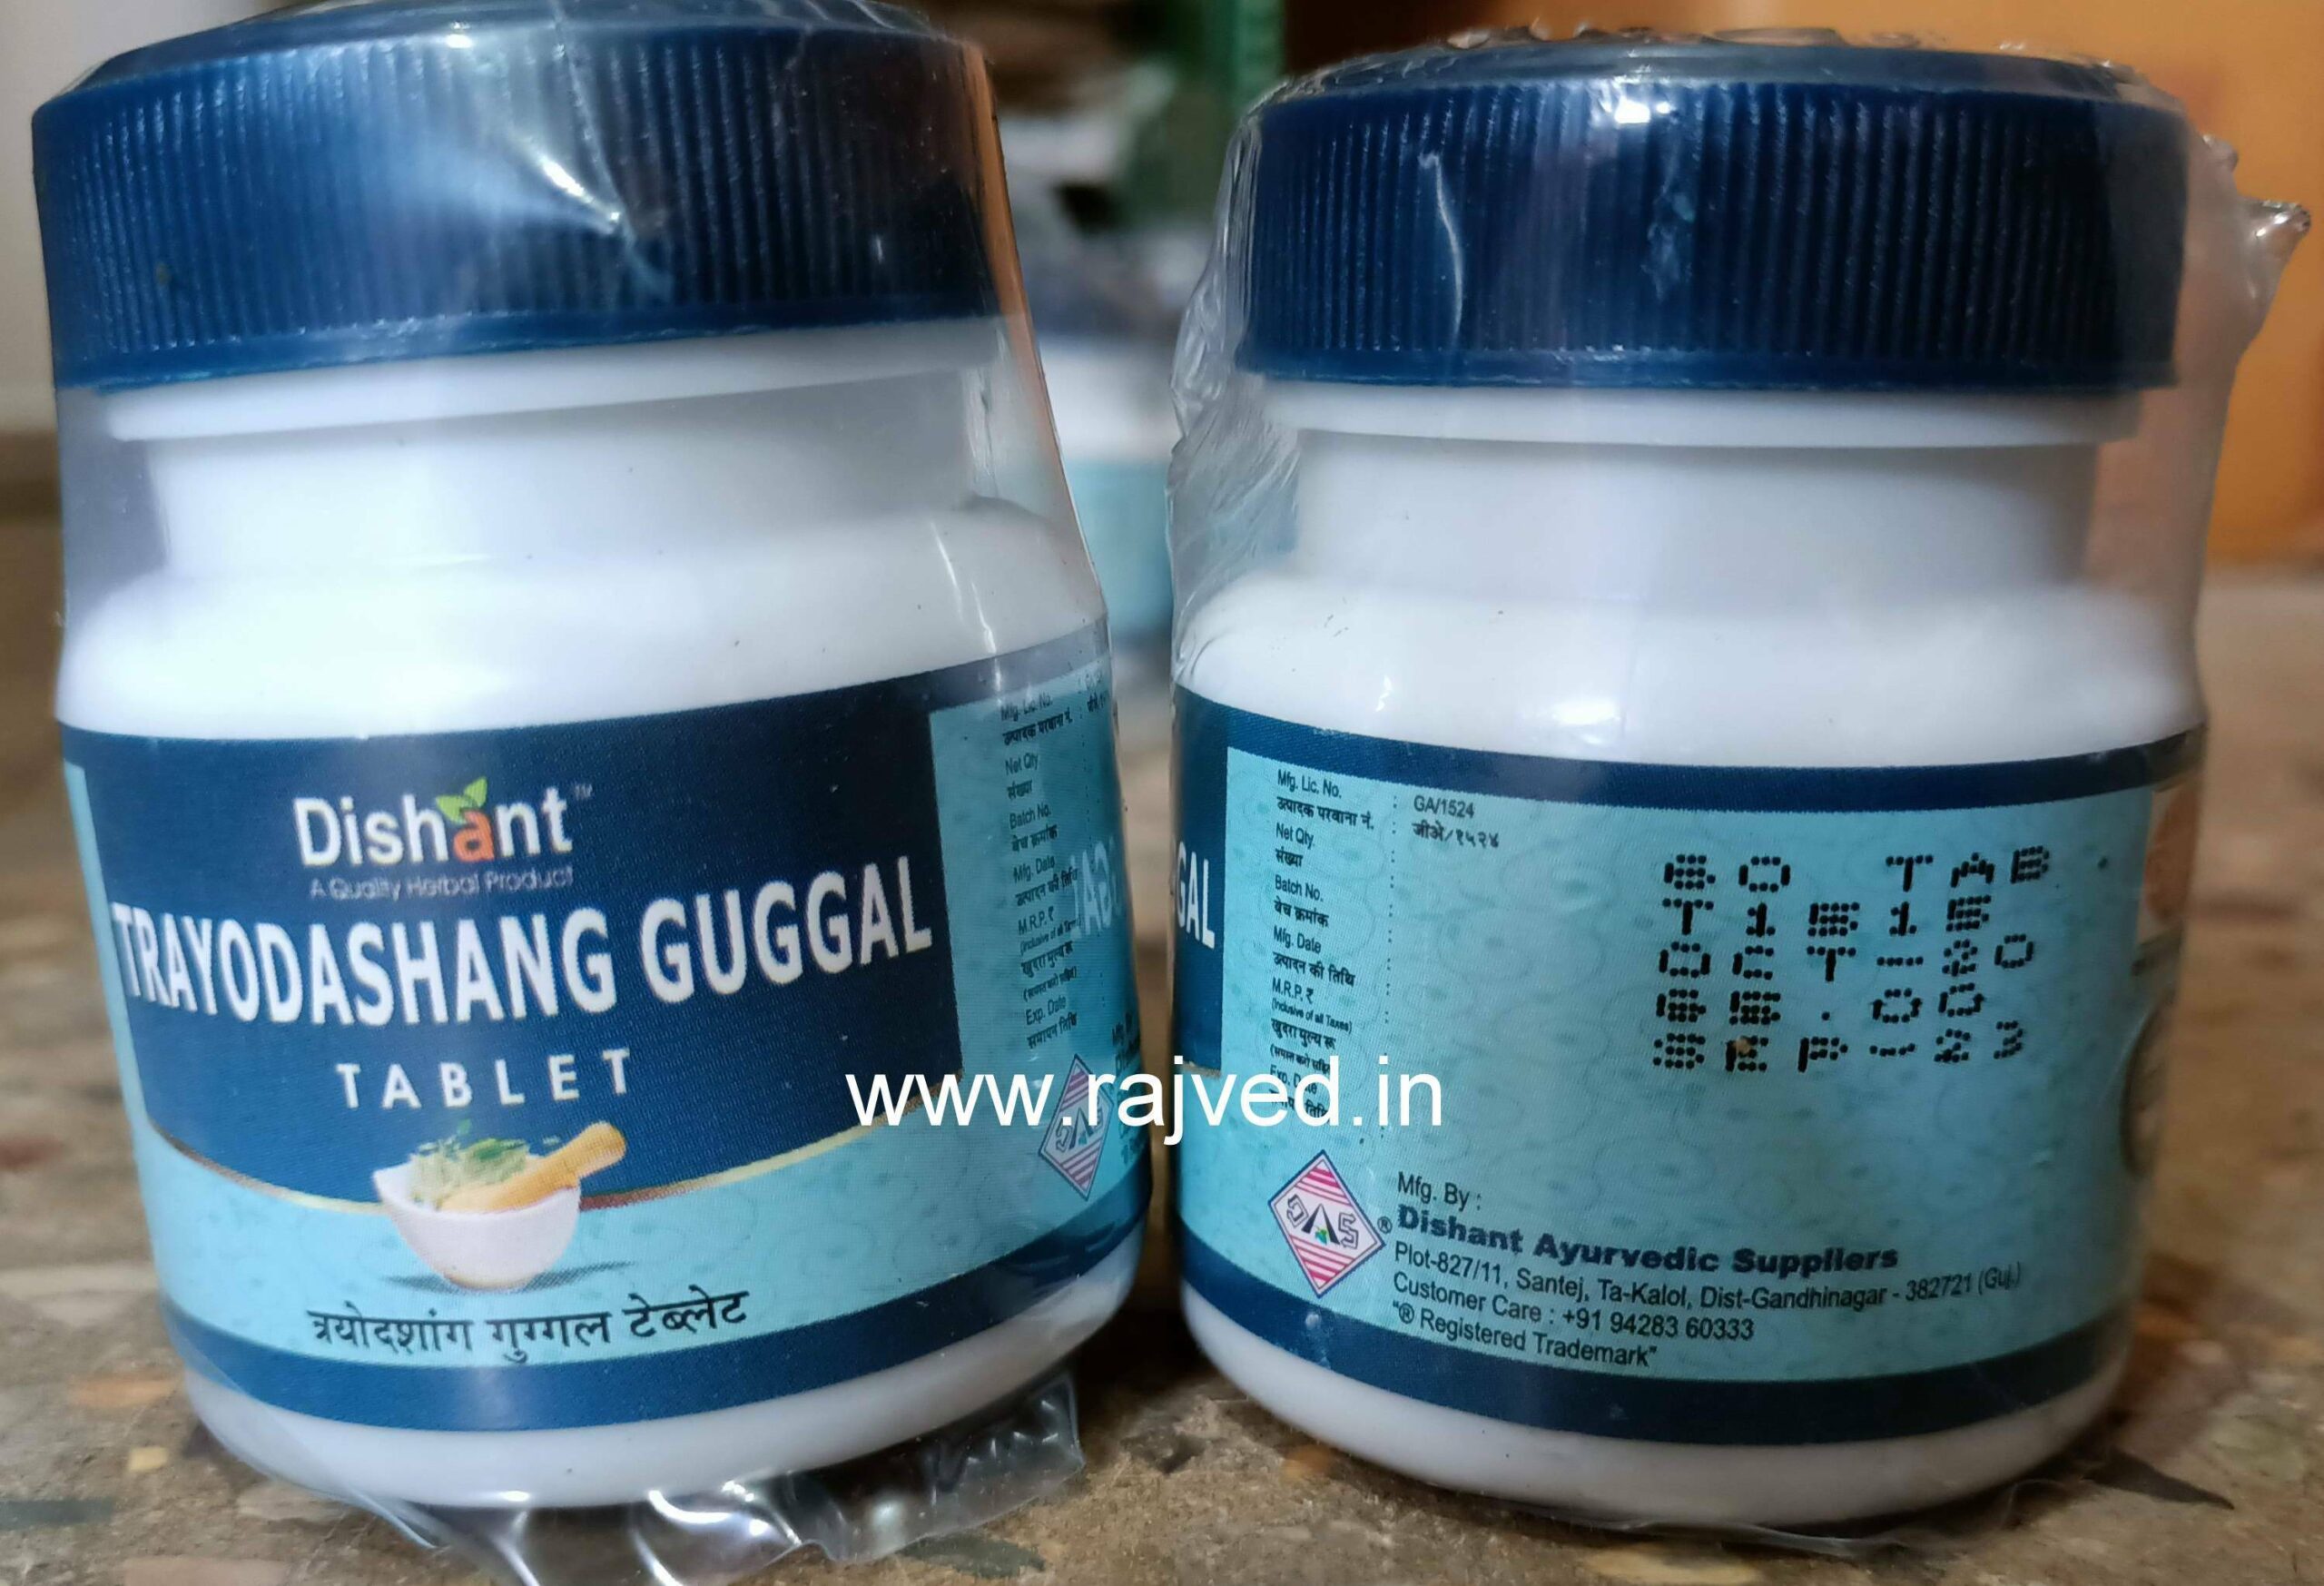 trayodashang guggulu tablets 250 gm upto 20% off dishant ayurvedic suppliers